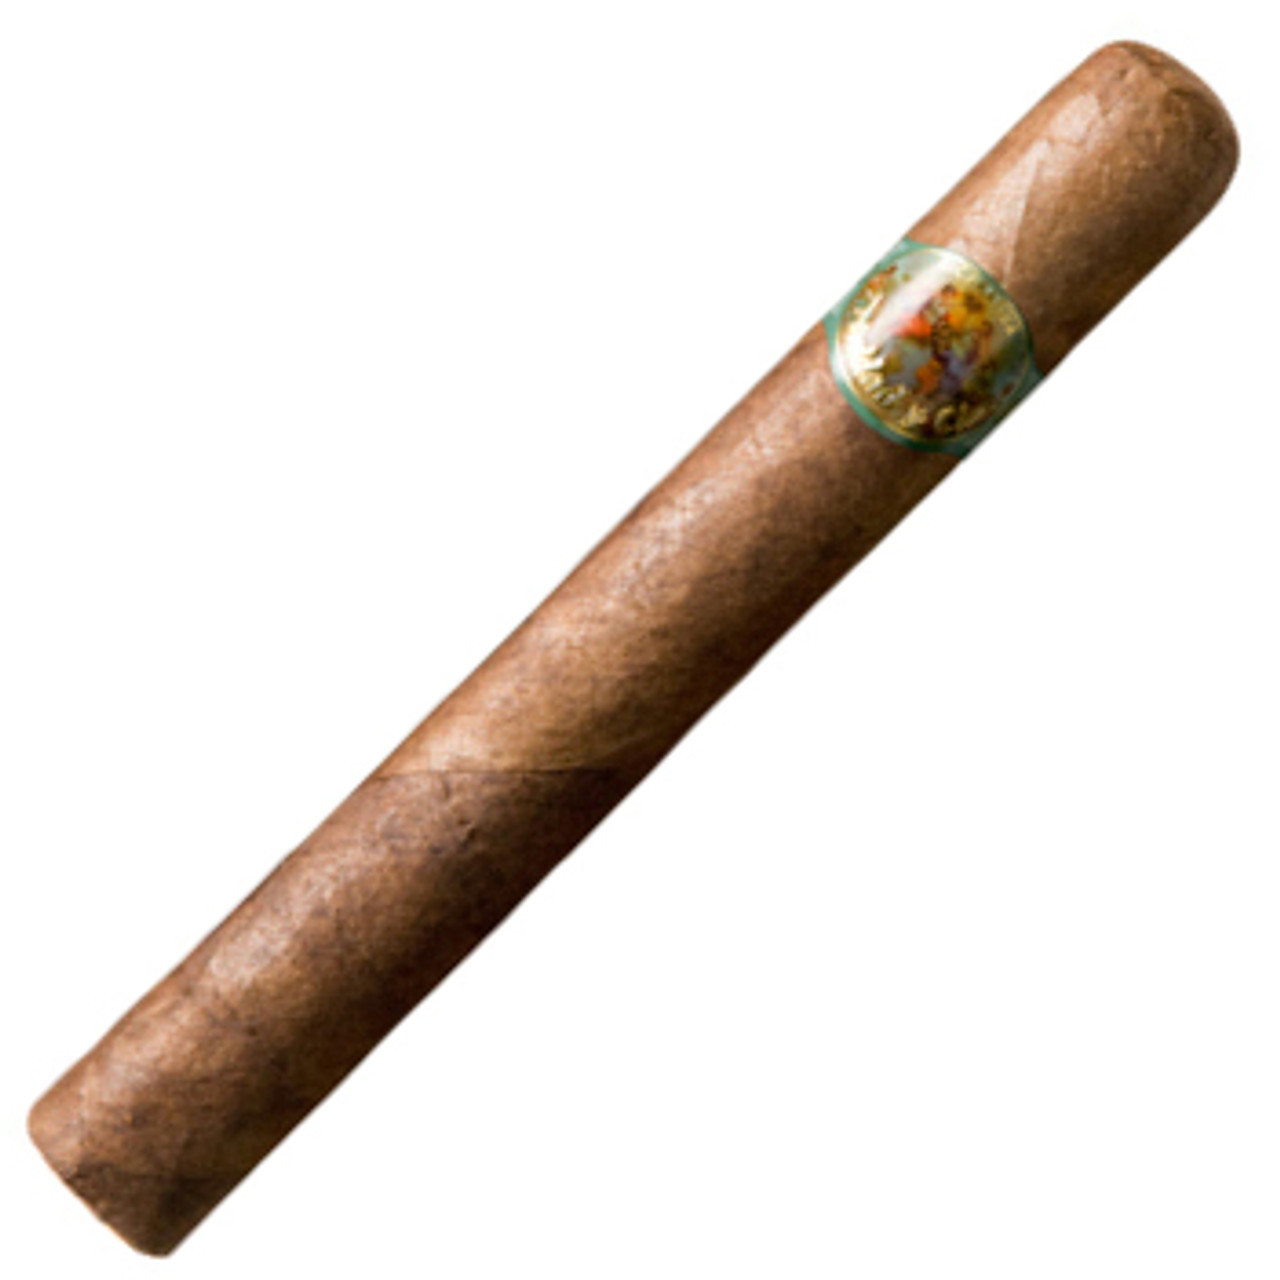 Trinidad y Cia Toro Cigars - 6 x 50 Single